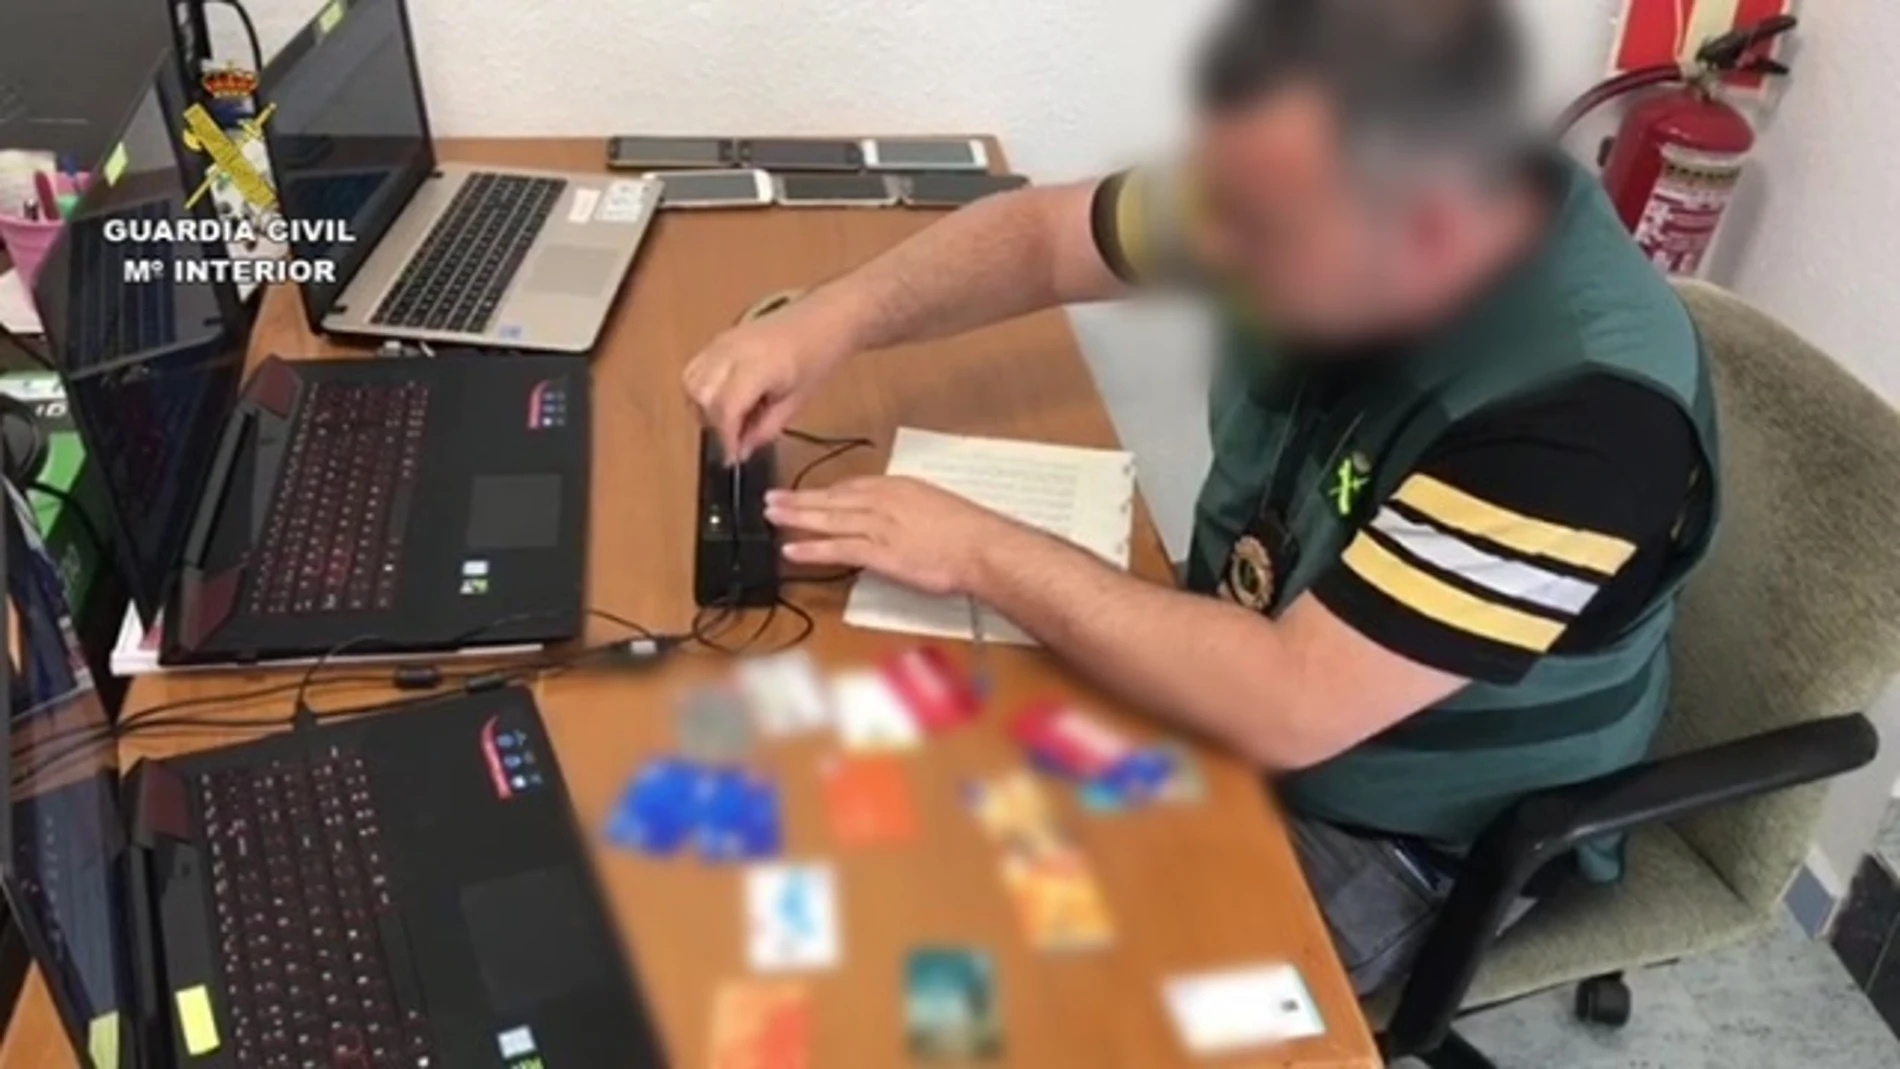 La Guardia Civil ha detenido a 35 personas e investigado a otras 22 por falsificar tarjetas bancarias